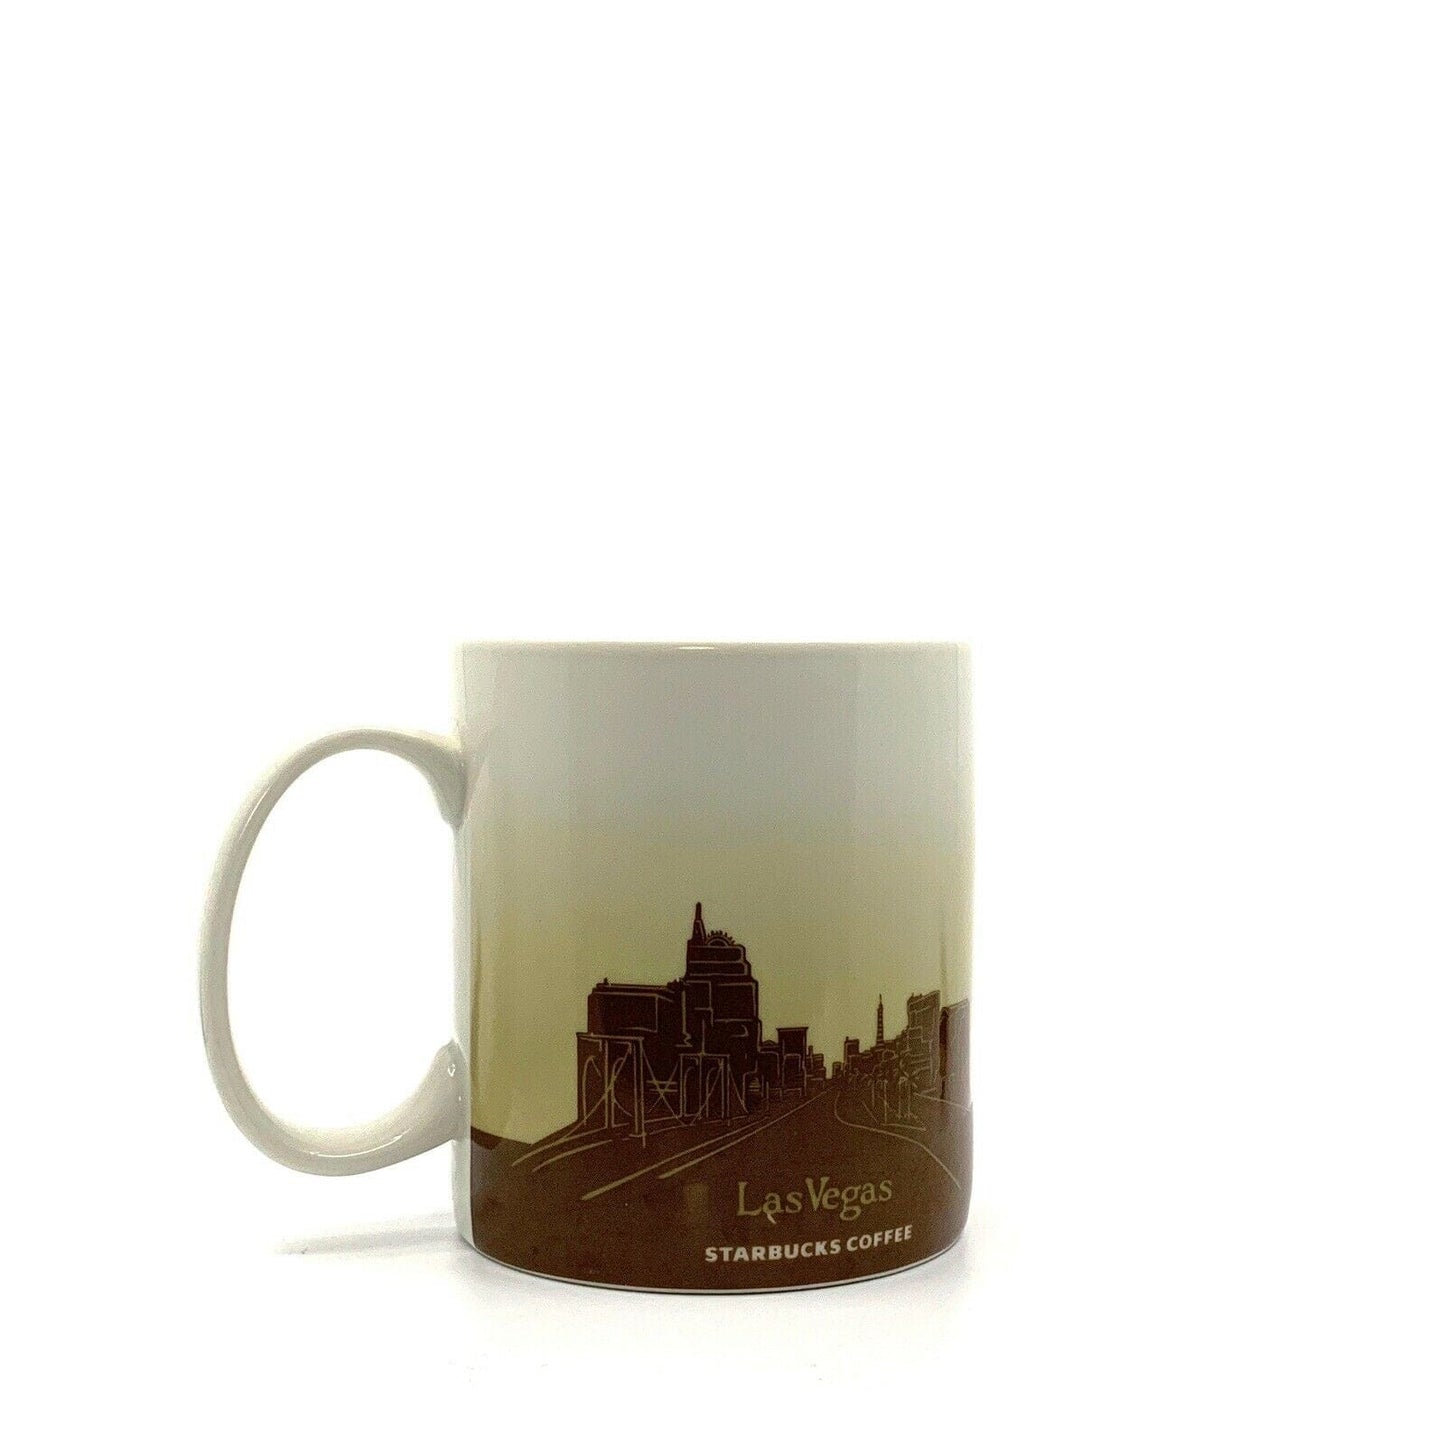 Fabulous Starbucks Las Vegas Coffee Mug - Charming Ceramic Cup - Vintage-inspired - Very Good Condition